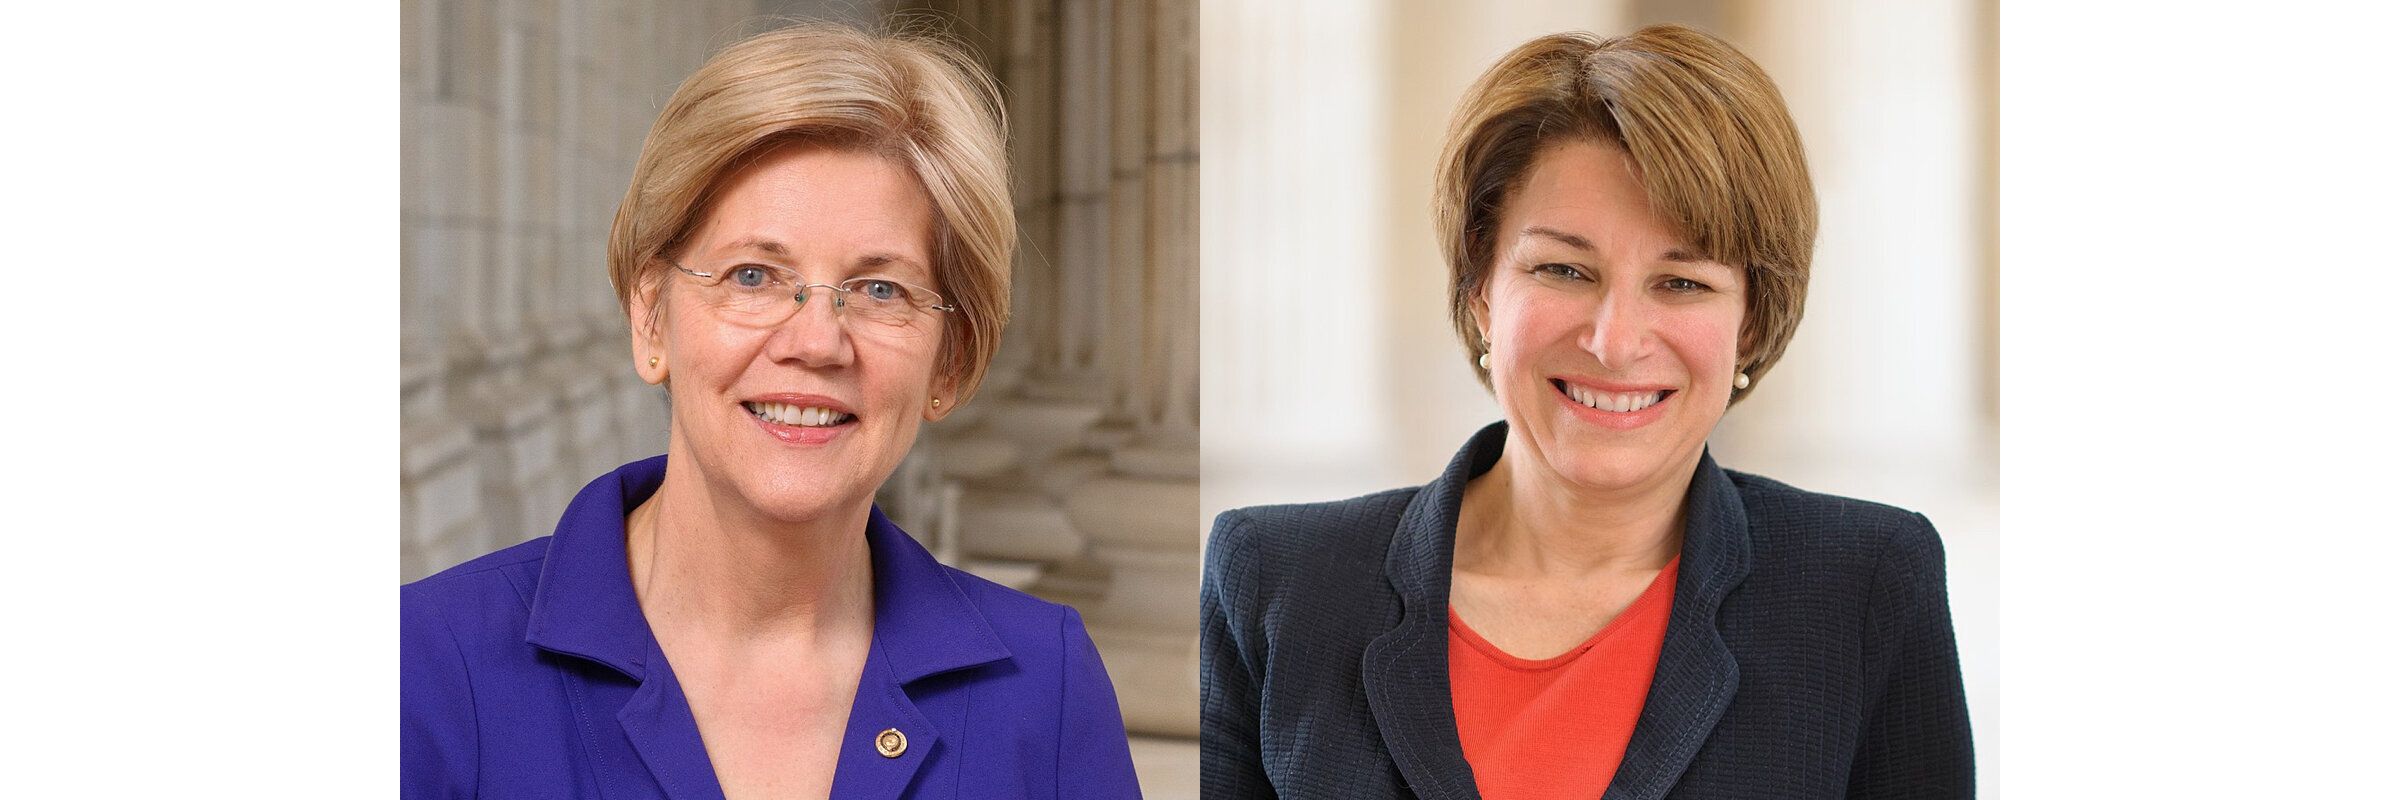 Polities: The New York Times Endorses Elizabeth Warren And Amy Klobuchar